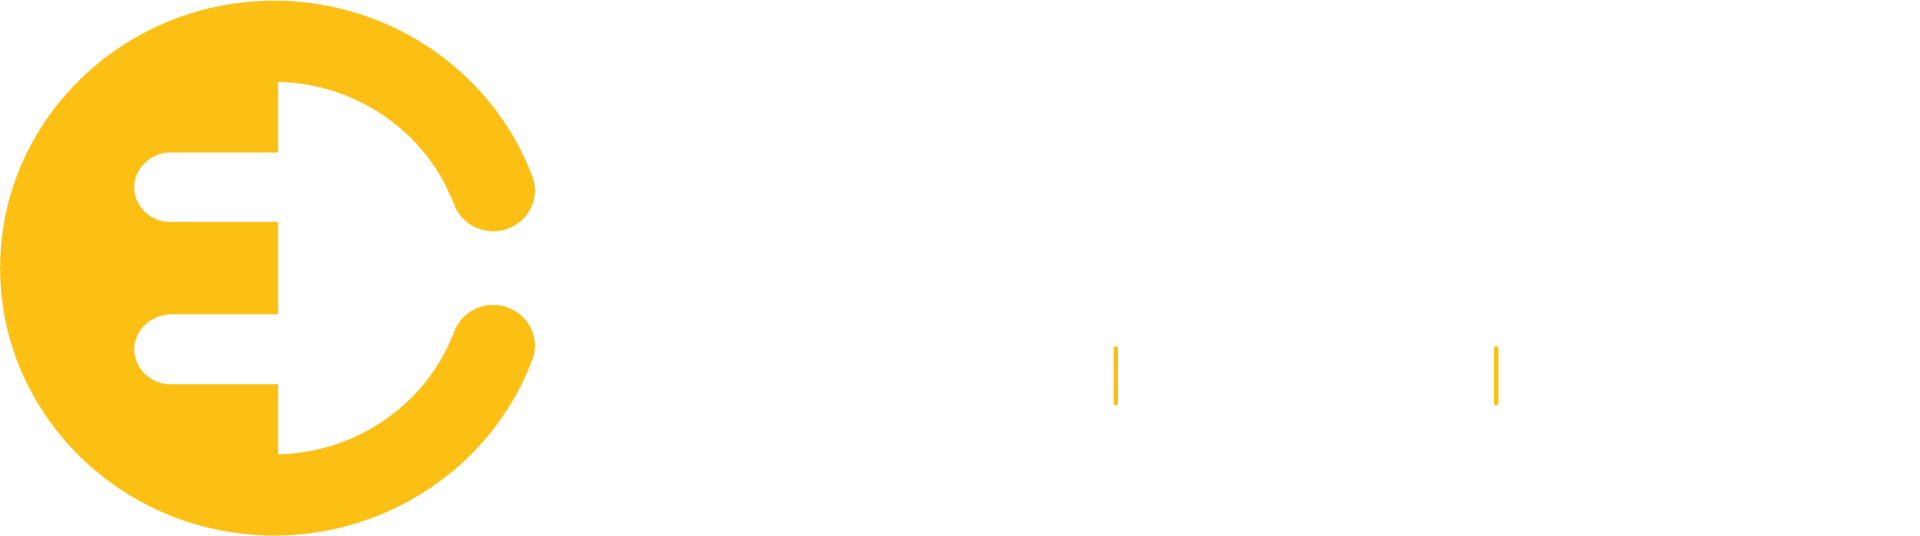 electracon company logo